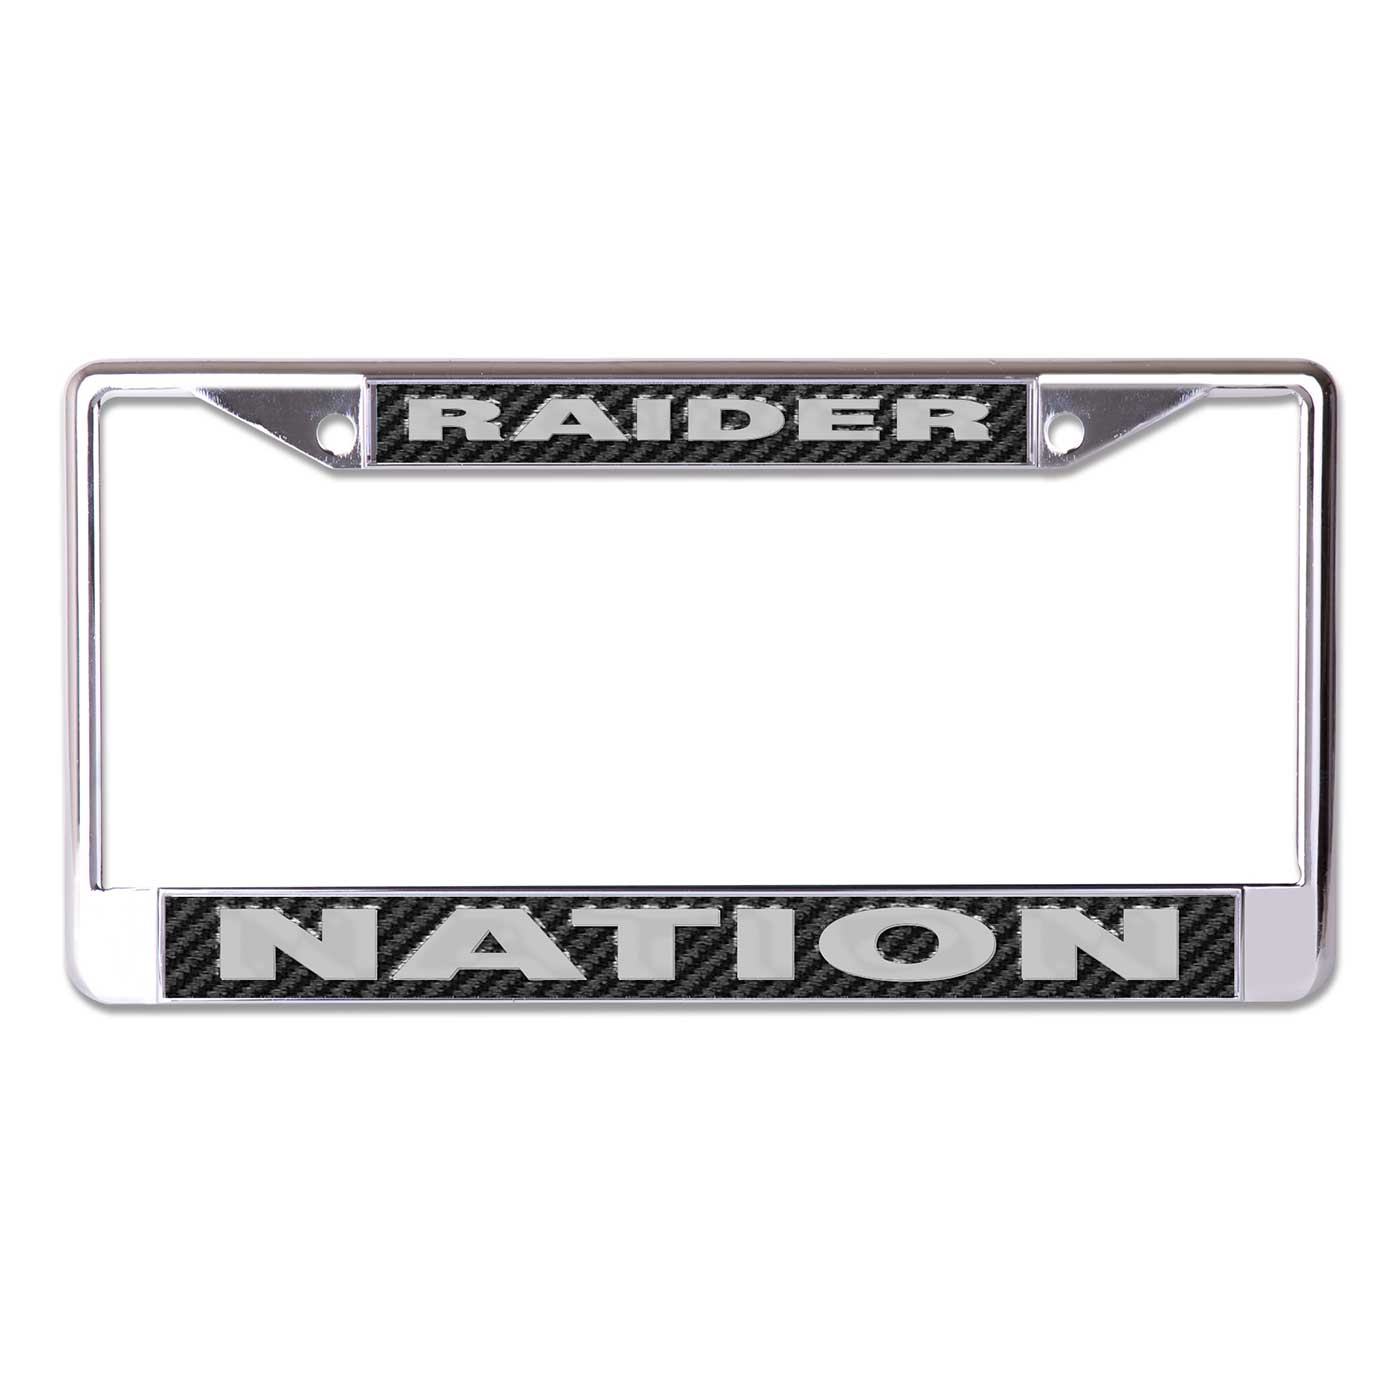 lv raiders license plate frame